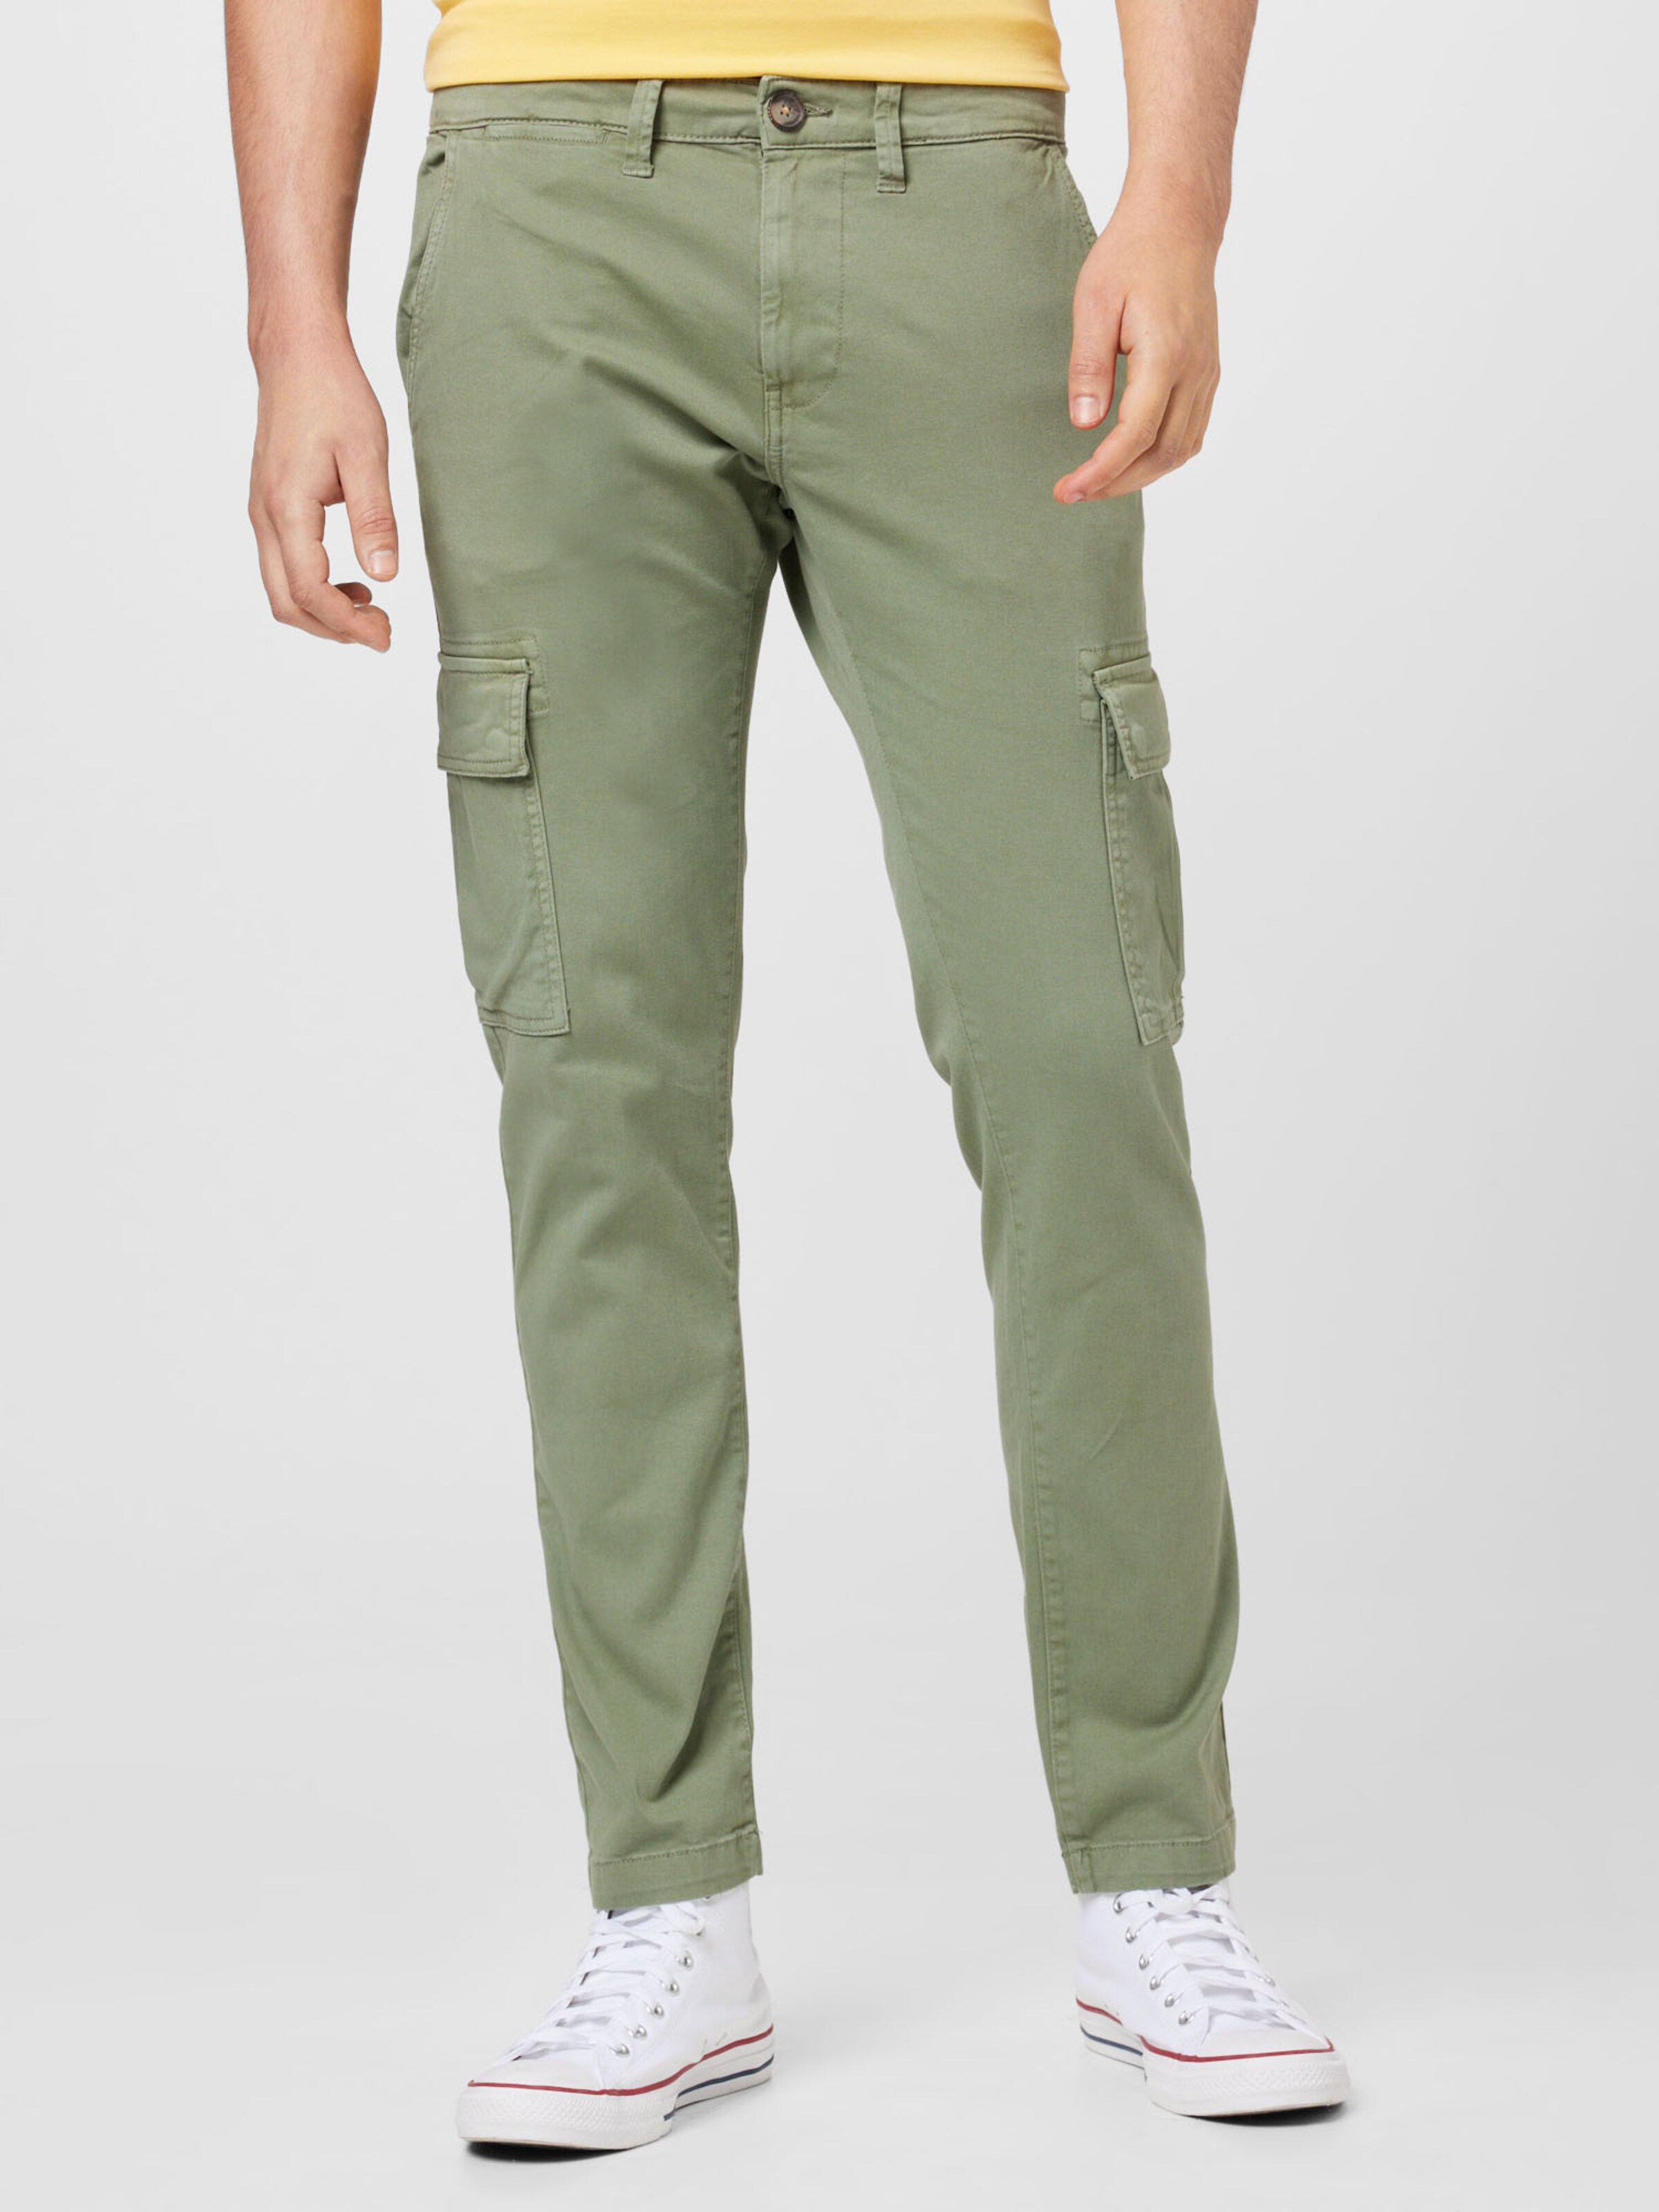 Black Cargo trousers Stussy - Pepe Jeans Pullover 'BIBI' grigio chiaro  marino rosa chiaro - GenesinlifeShops GB